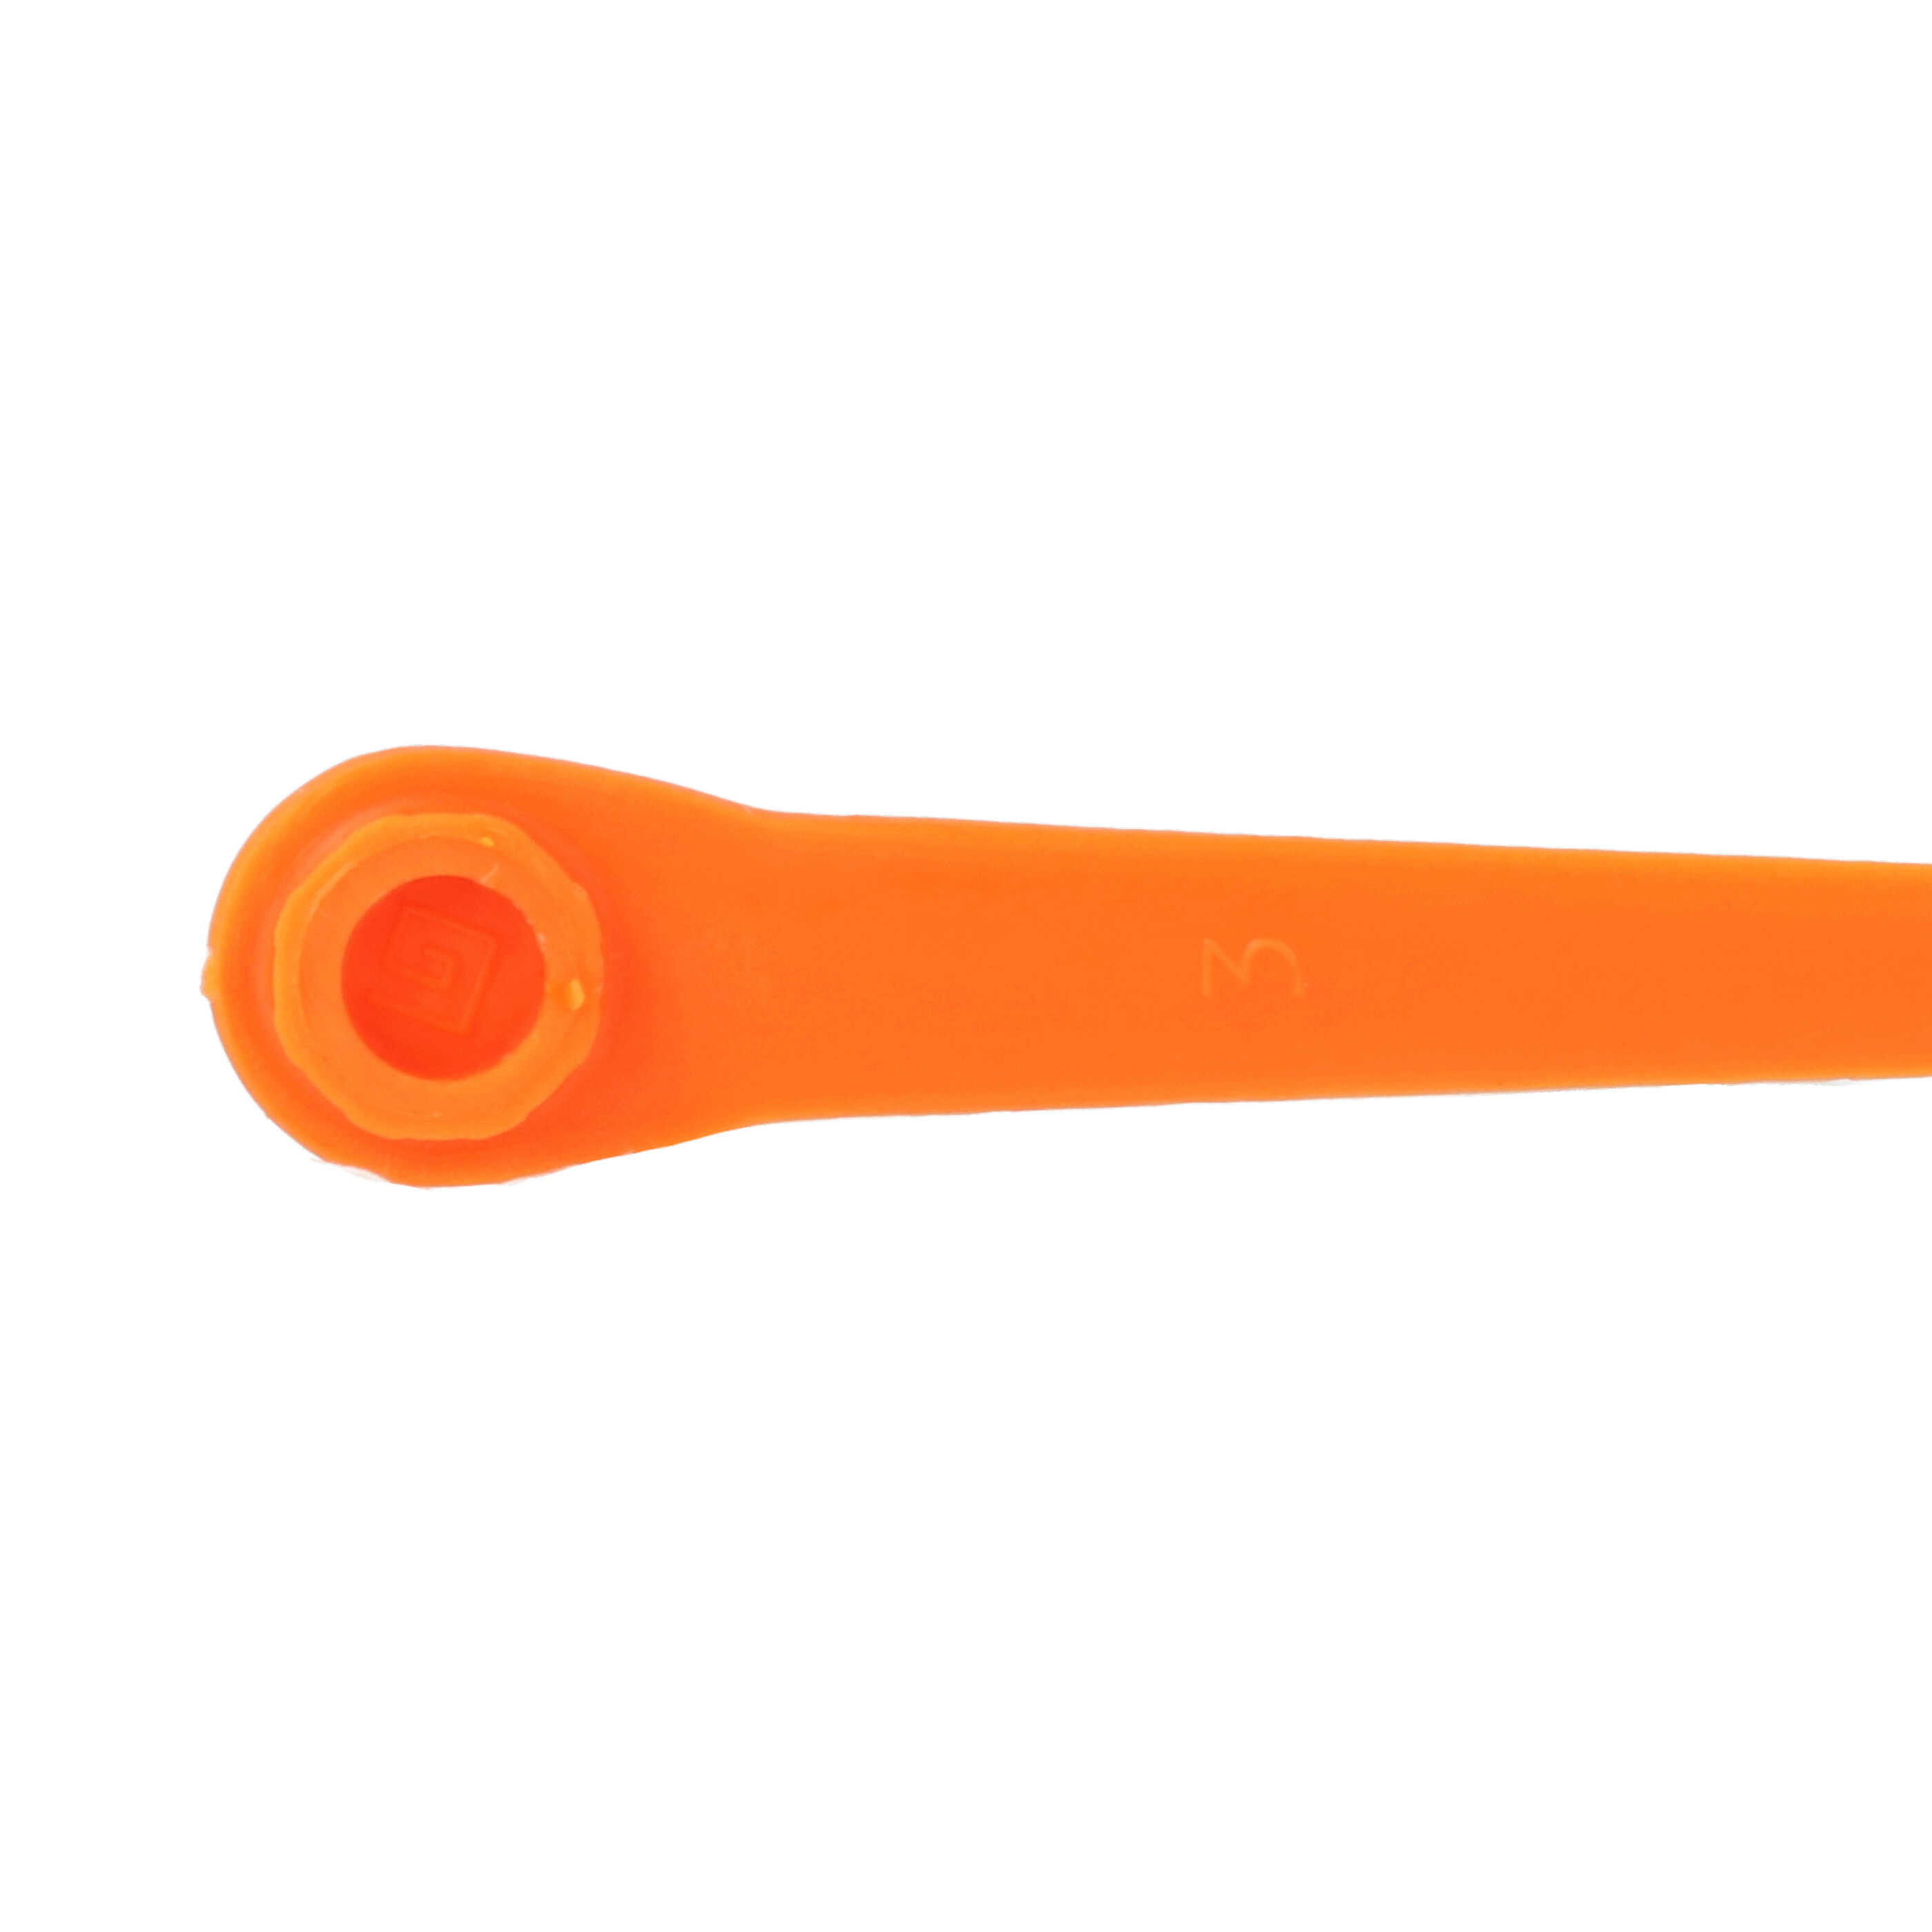 10x Cuchillas reemplaza Gardena RotorCut 5368-20 para cortacéspedes - naranja